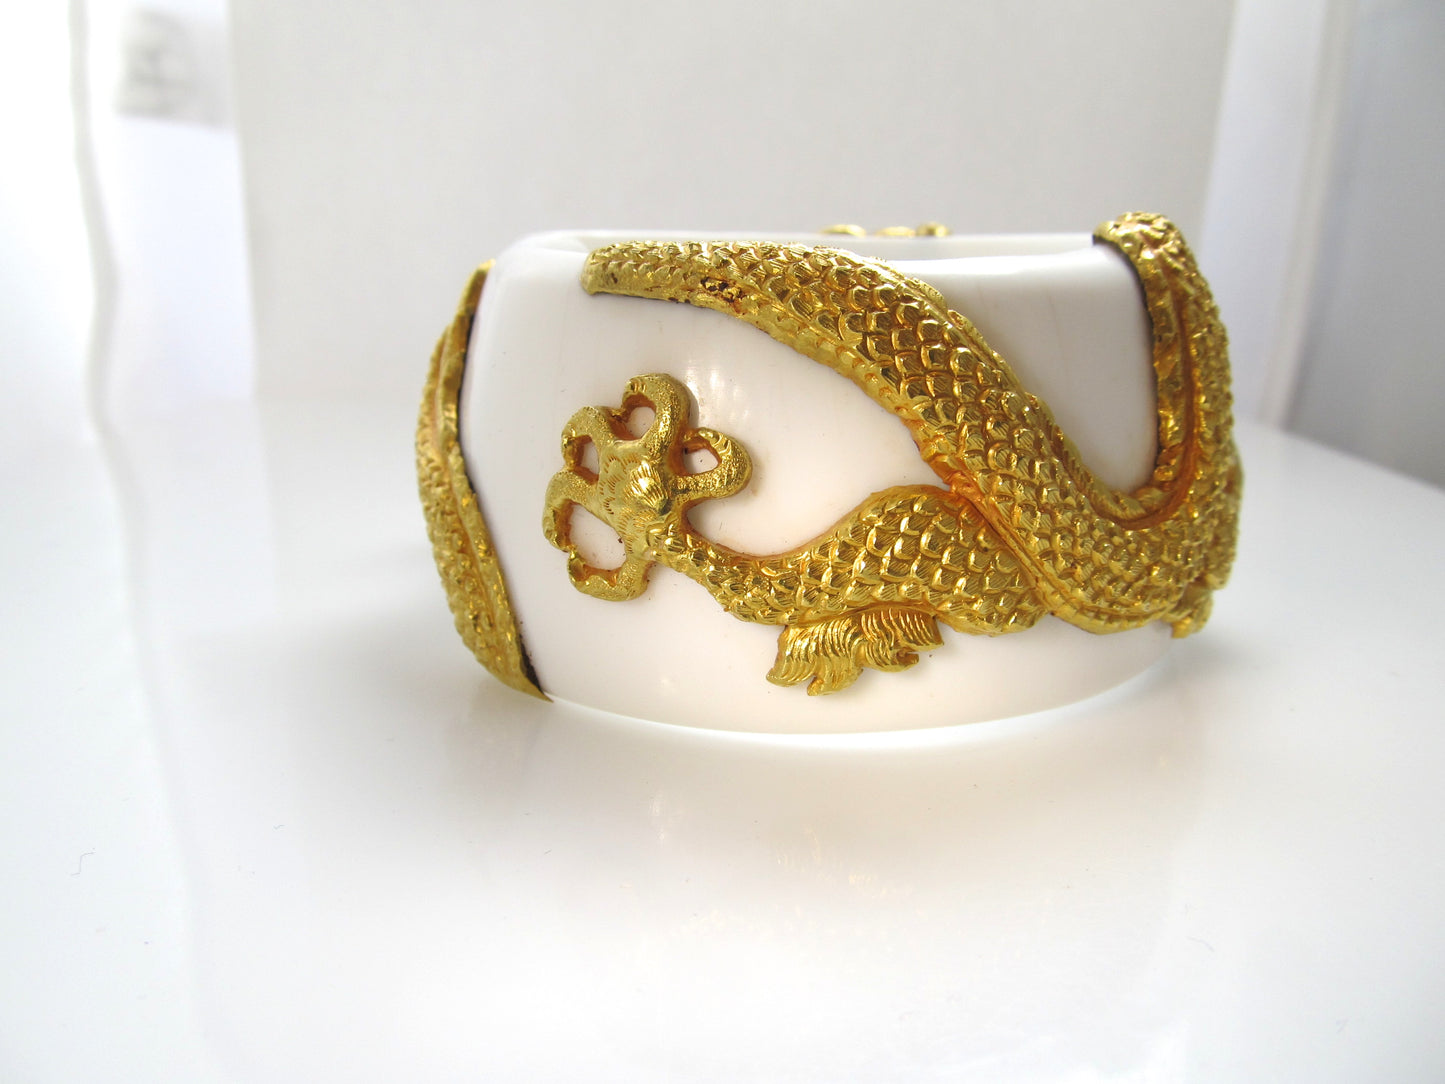 HUGE!  22k yellow gold dragon bracelet on shell with diamonds